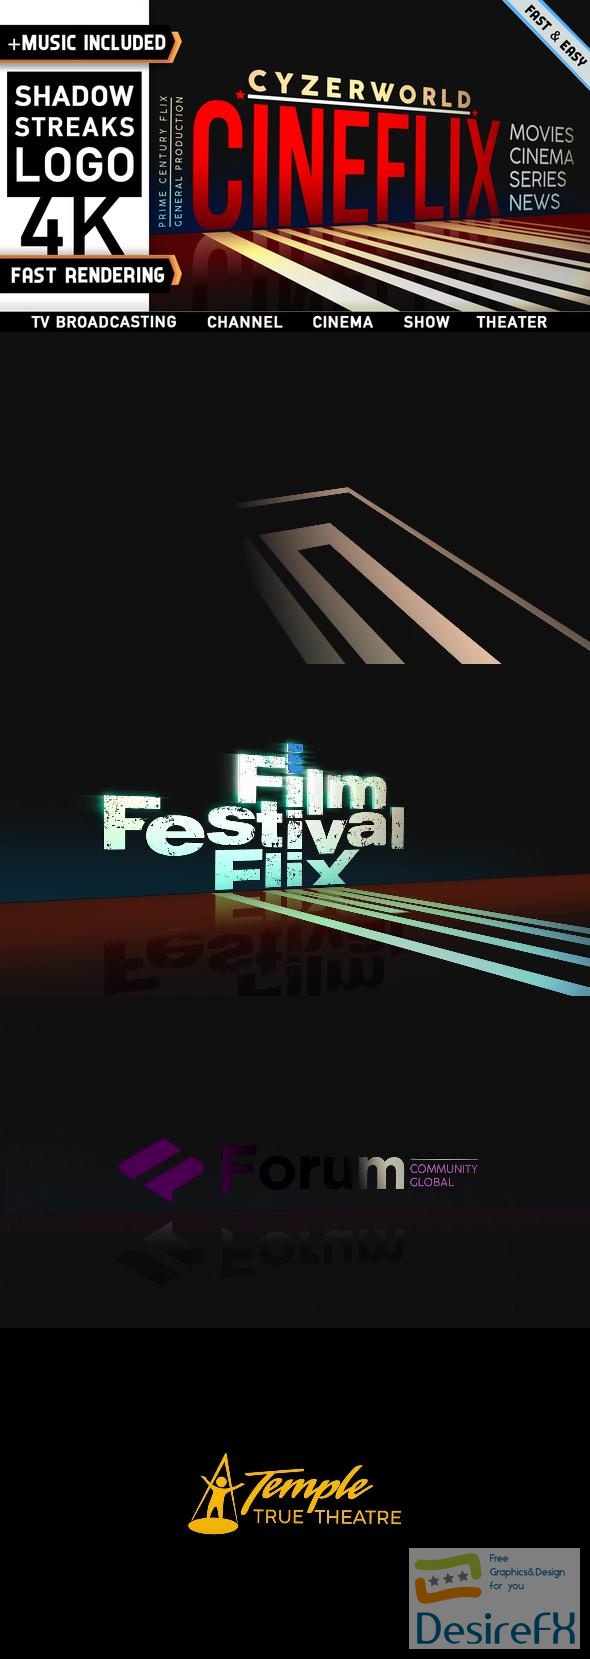 VideoHive Logo Shadow Streaks - Theater Cinema Stage 45483131